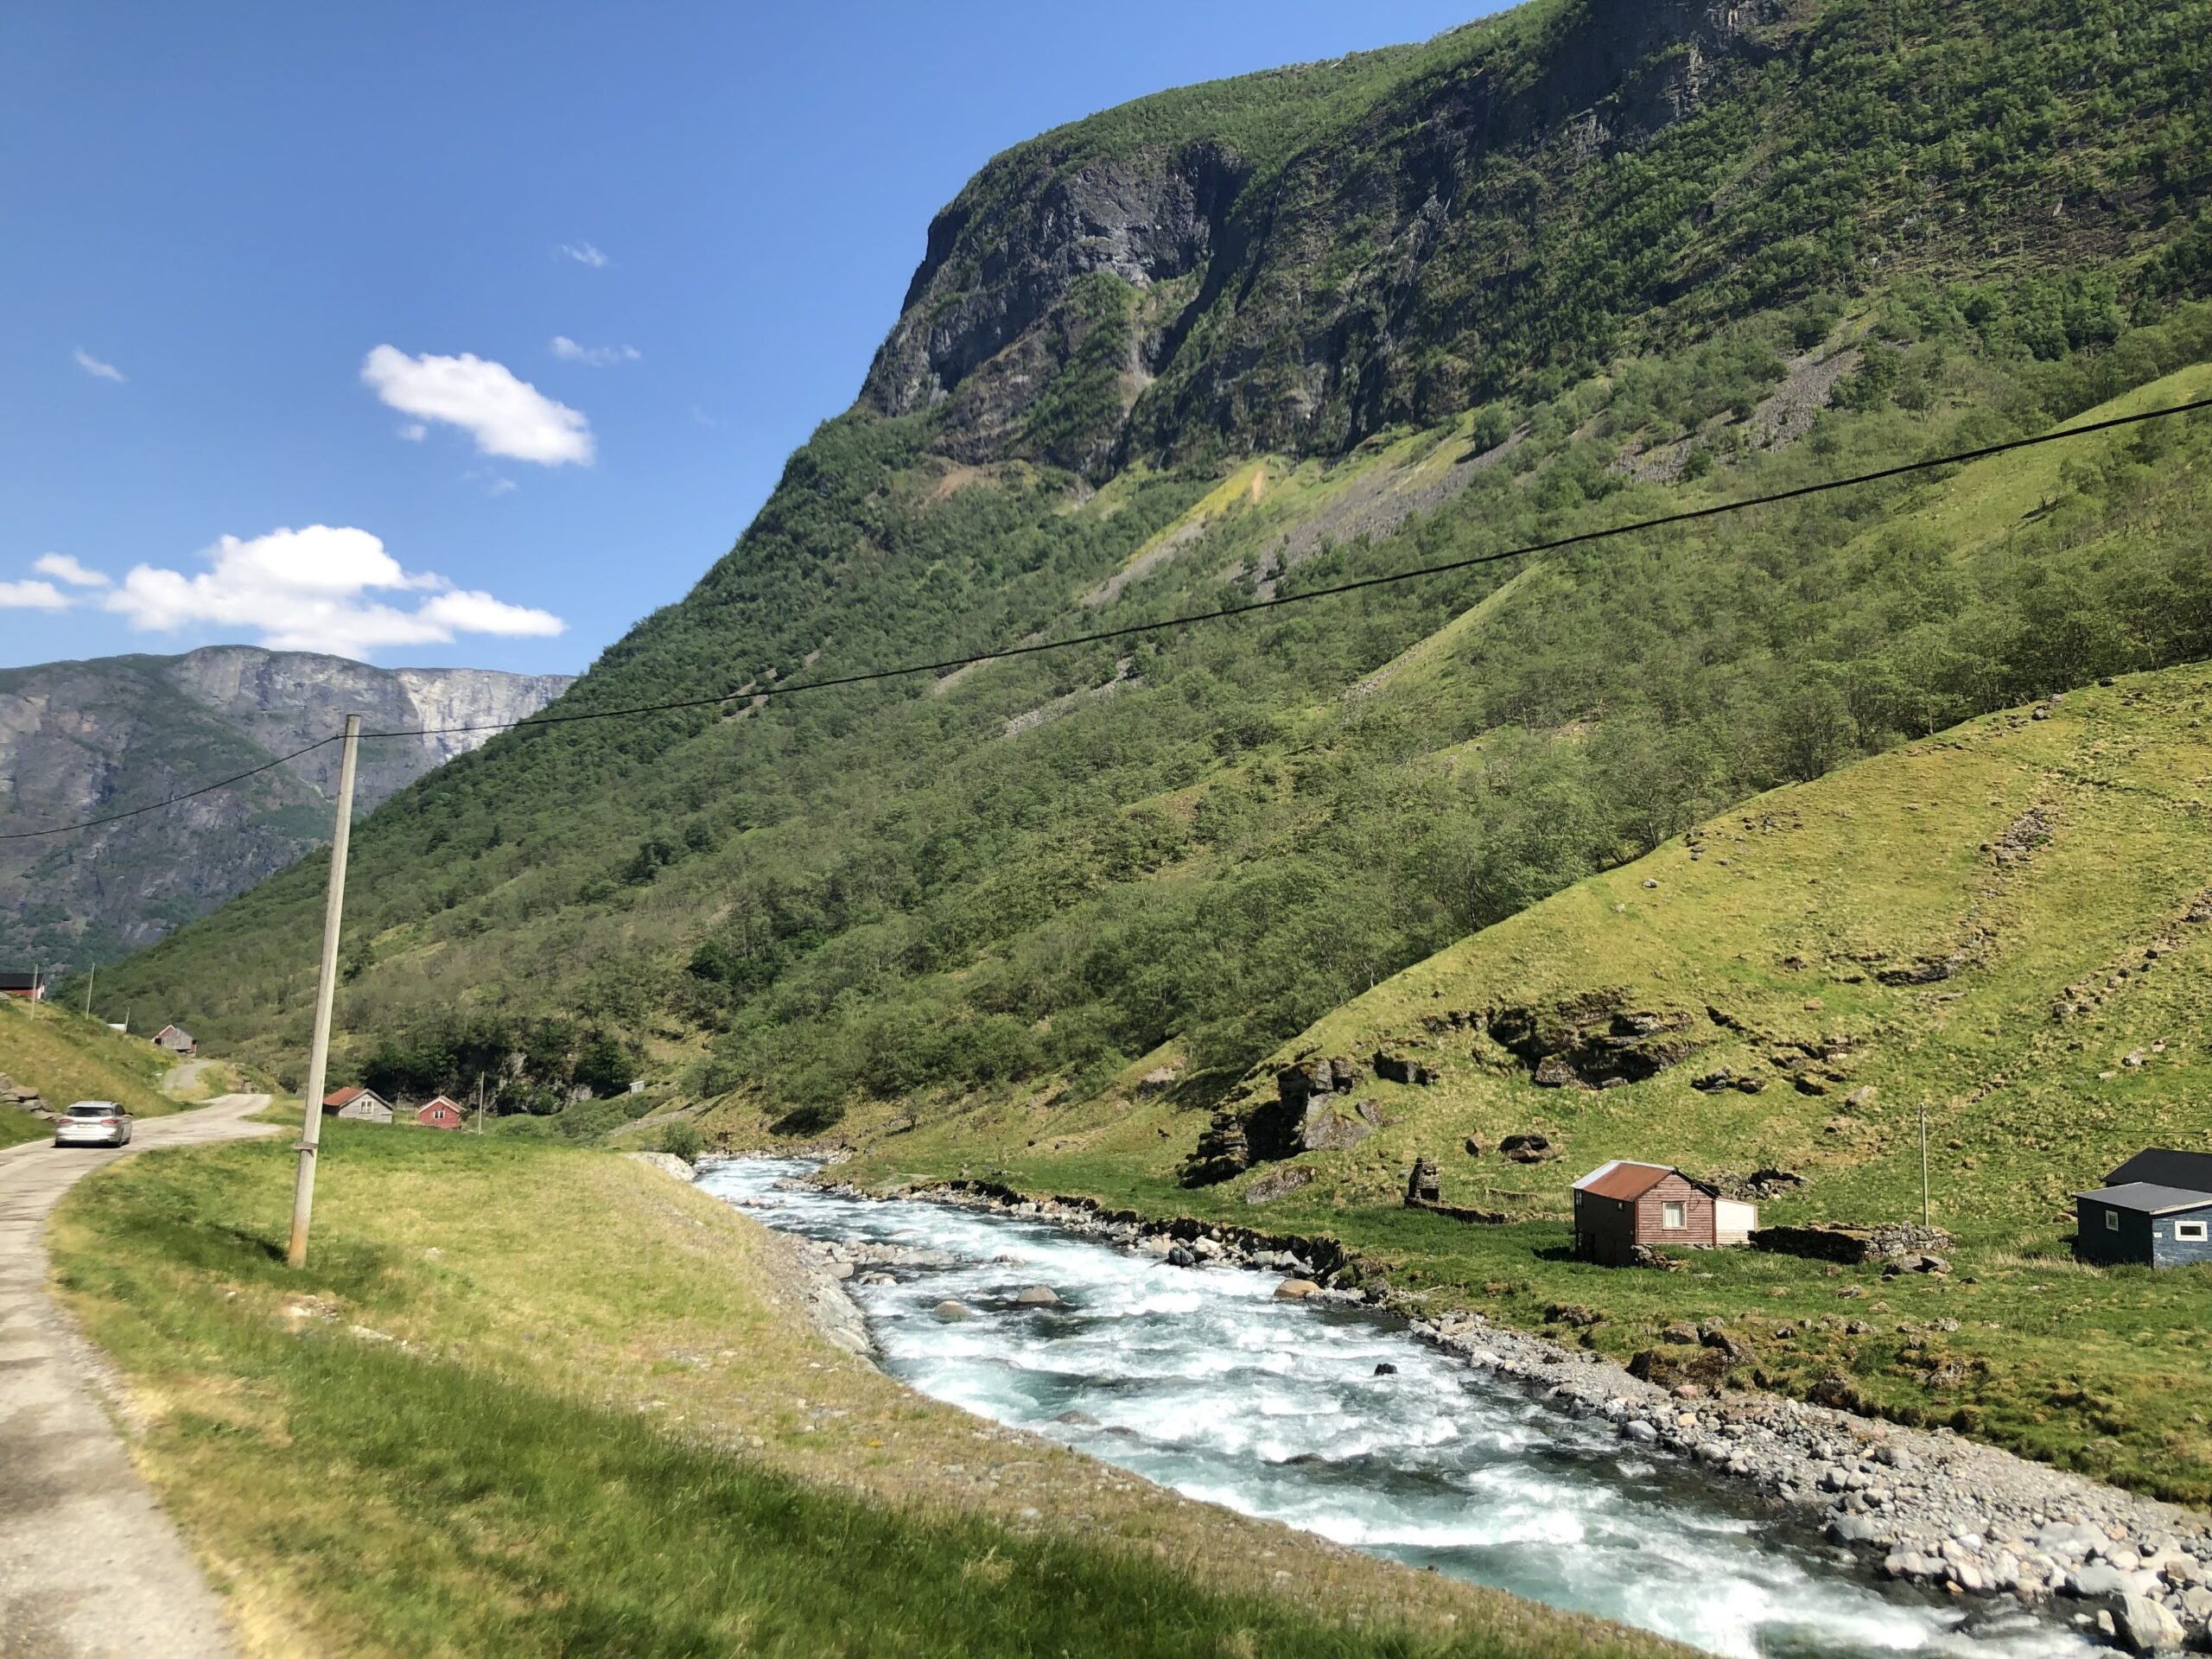 Backpacking in Norway